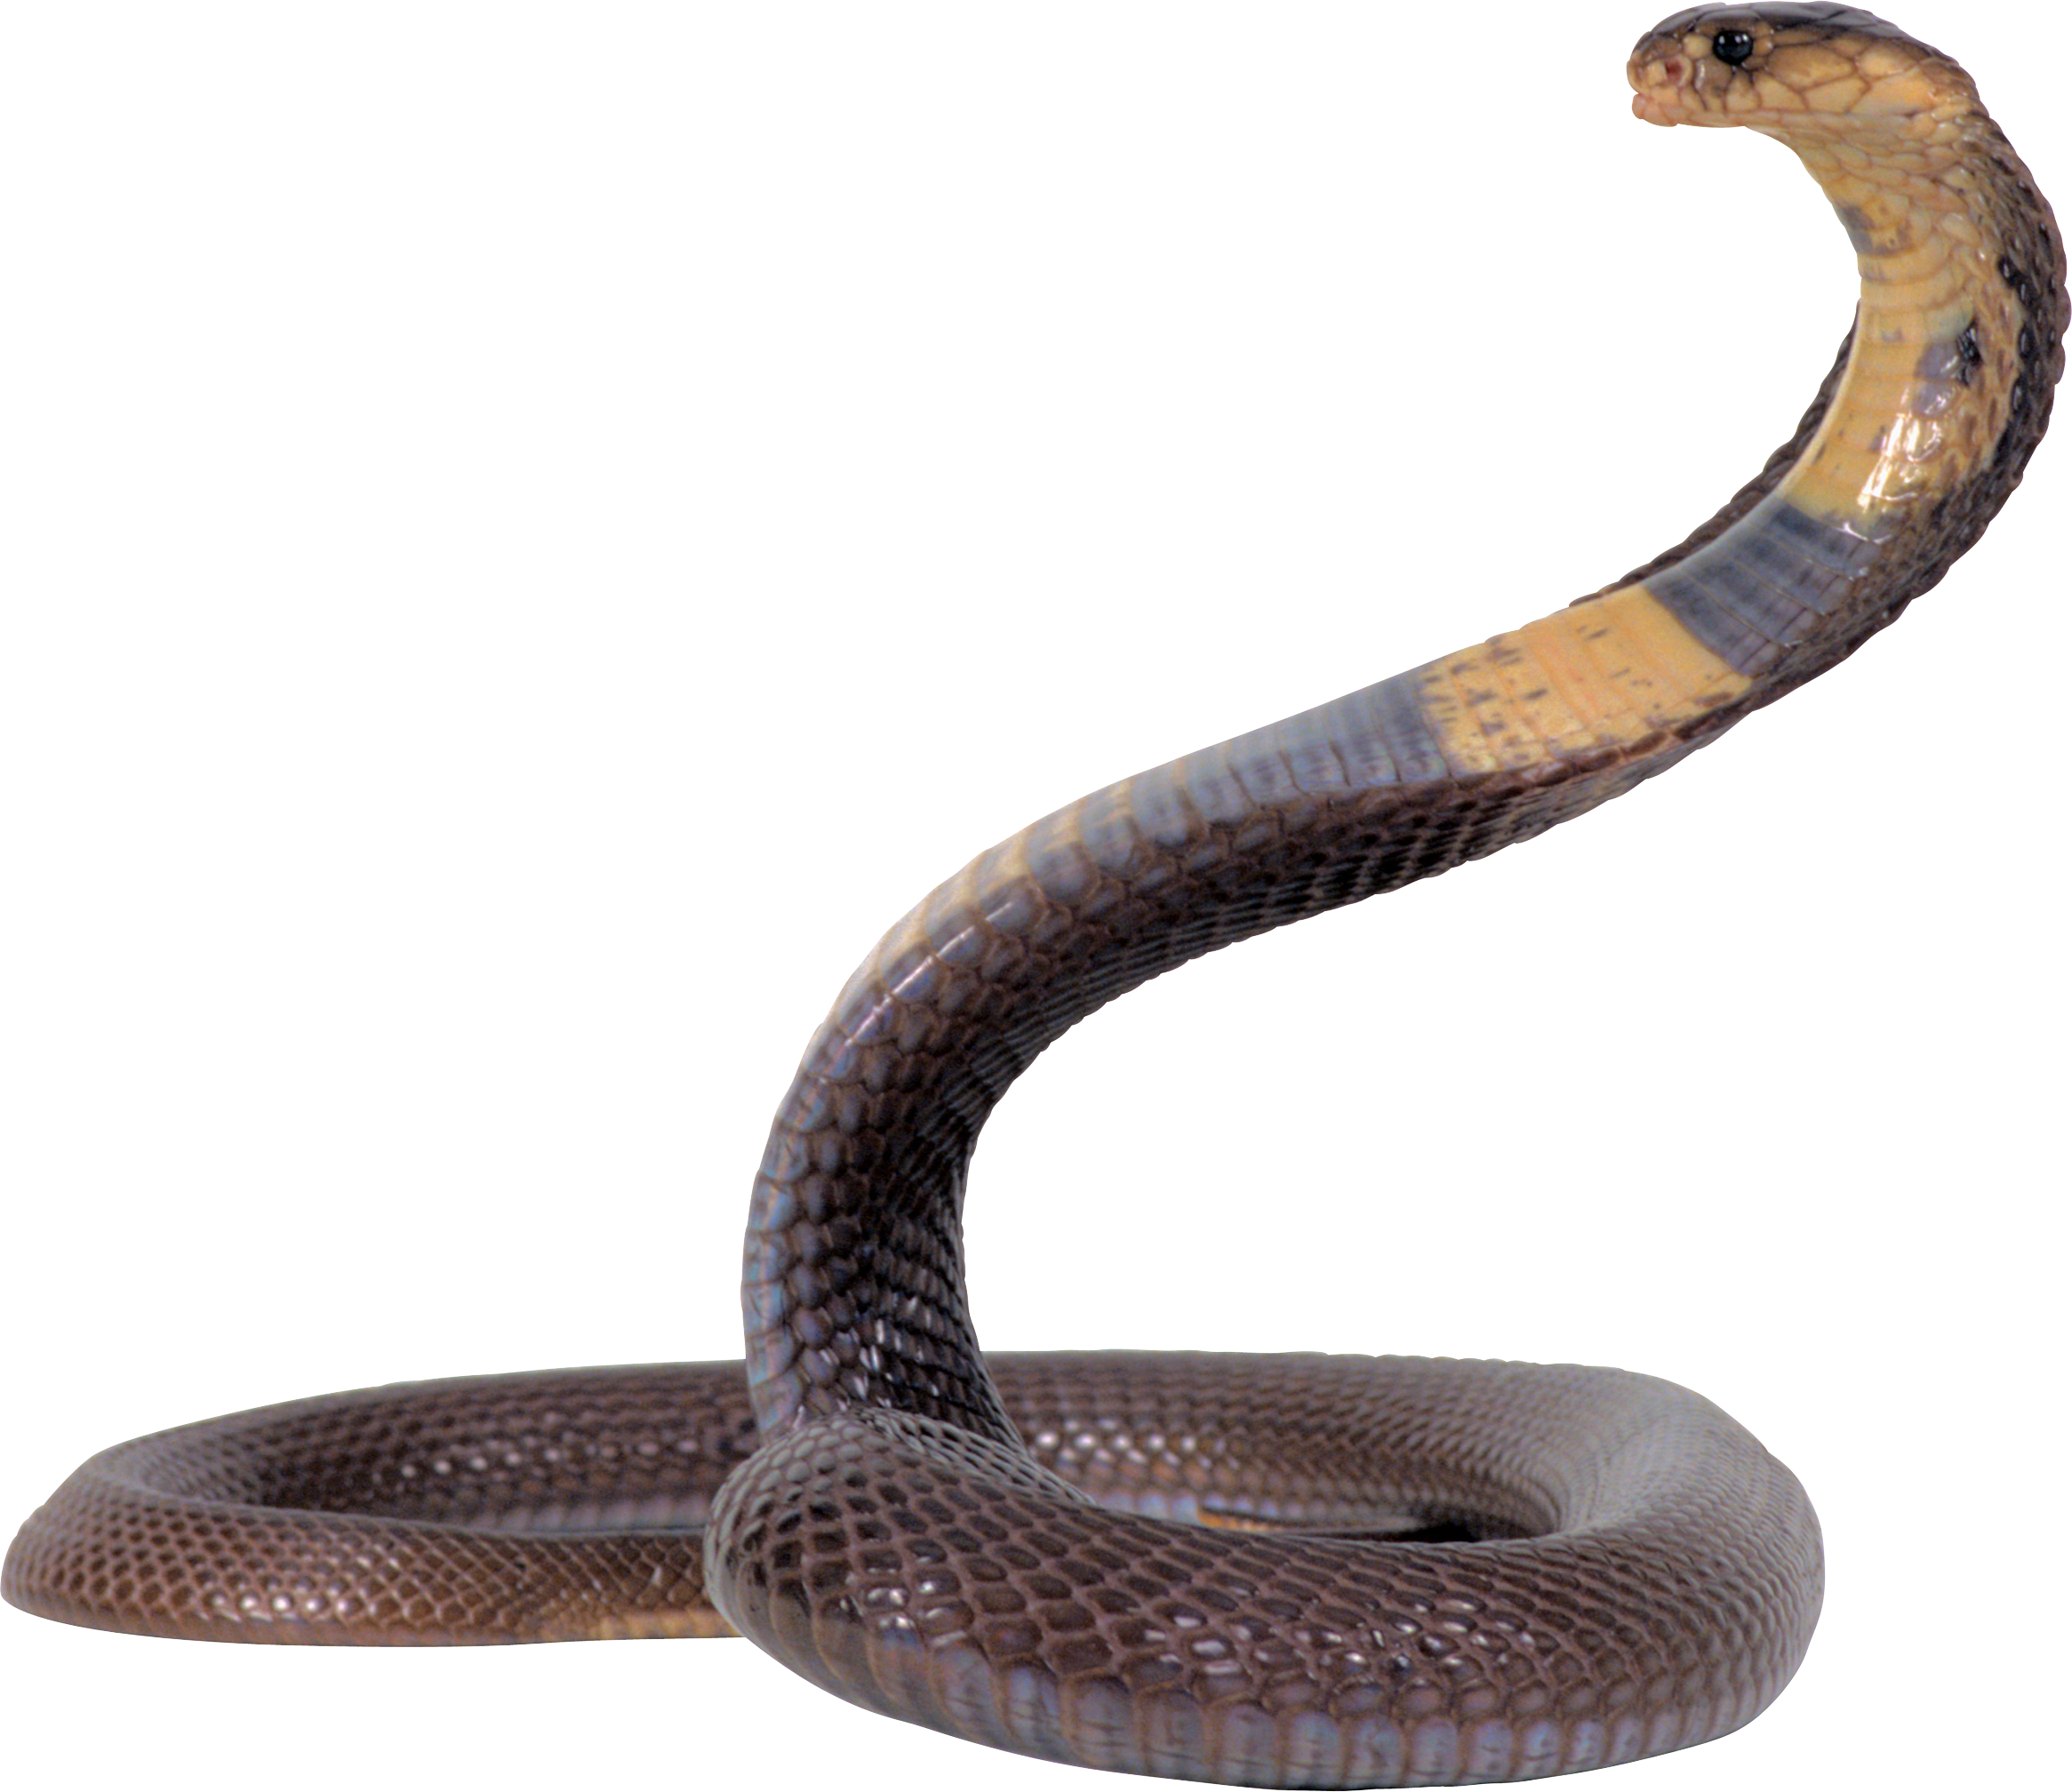 Cobra Snake PNG Free Download